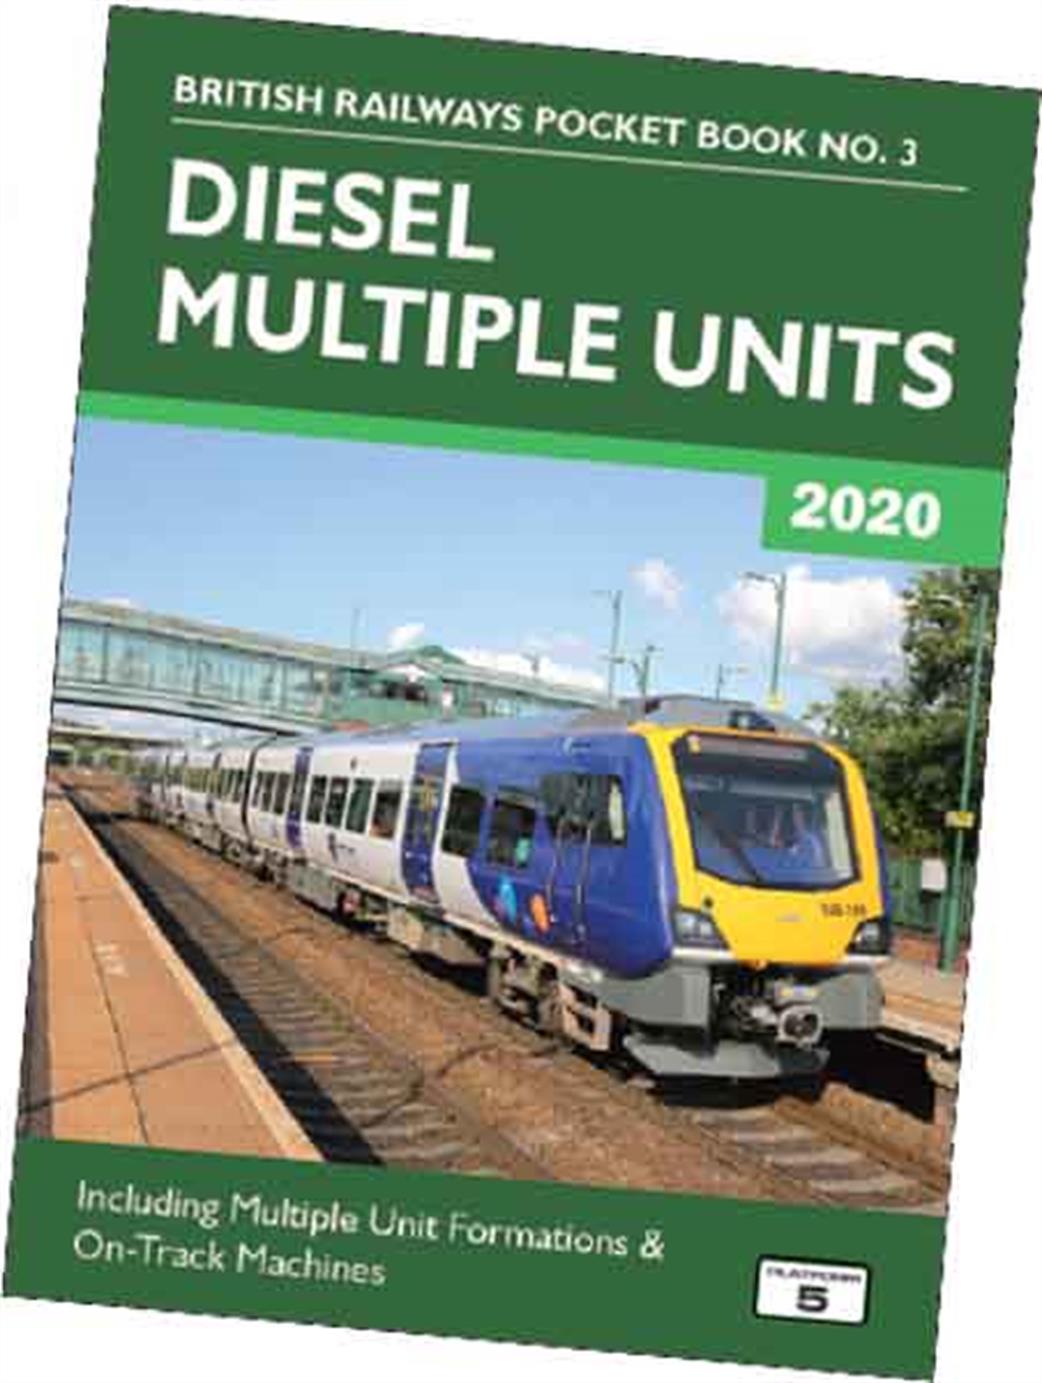 Platform 5 BRPB3 20 British Railways Diesel Multiple Units and On-Track Machines 2020 Pocket Book